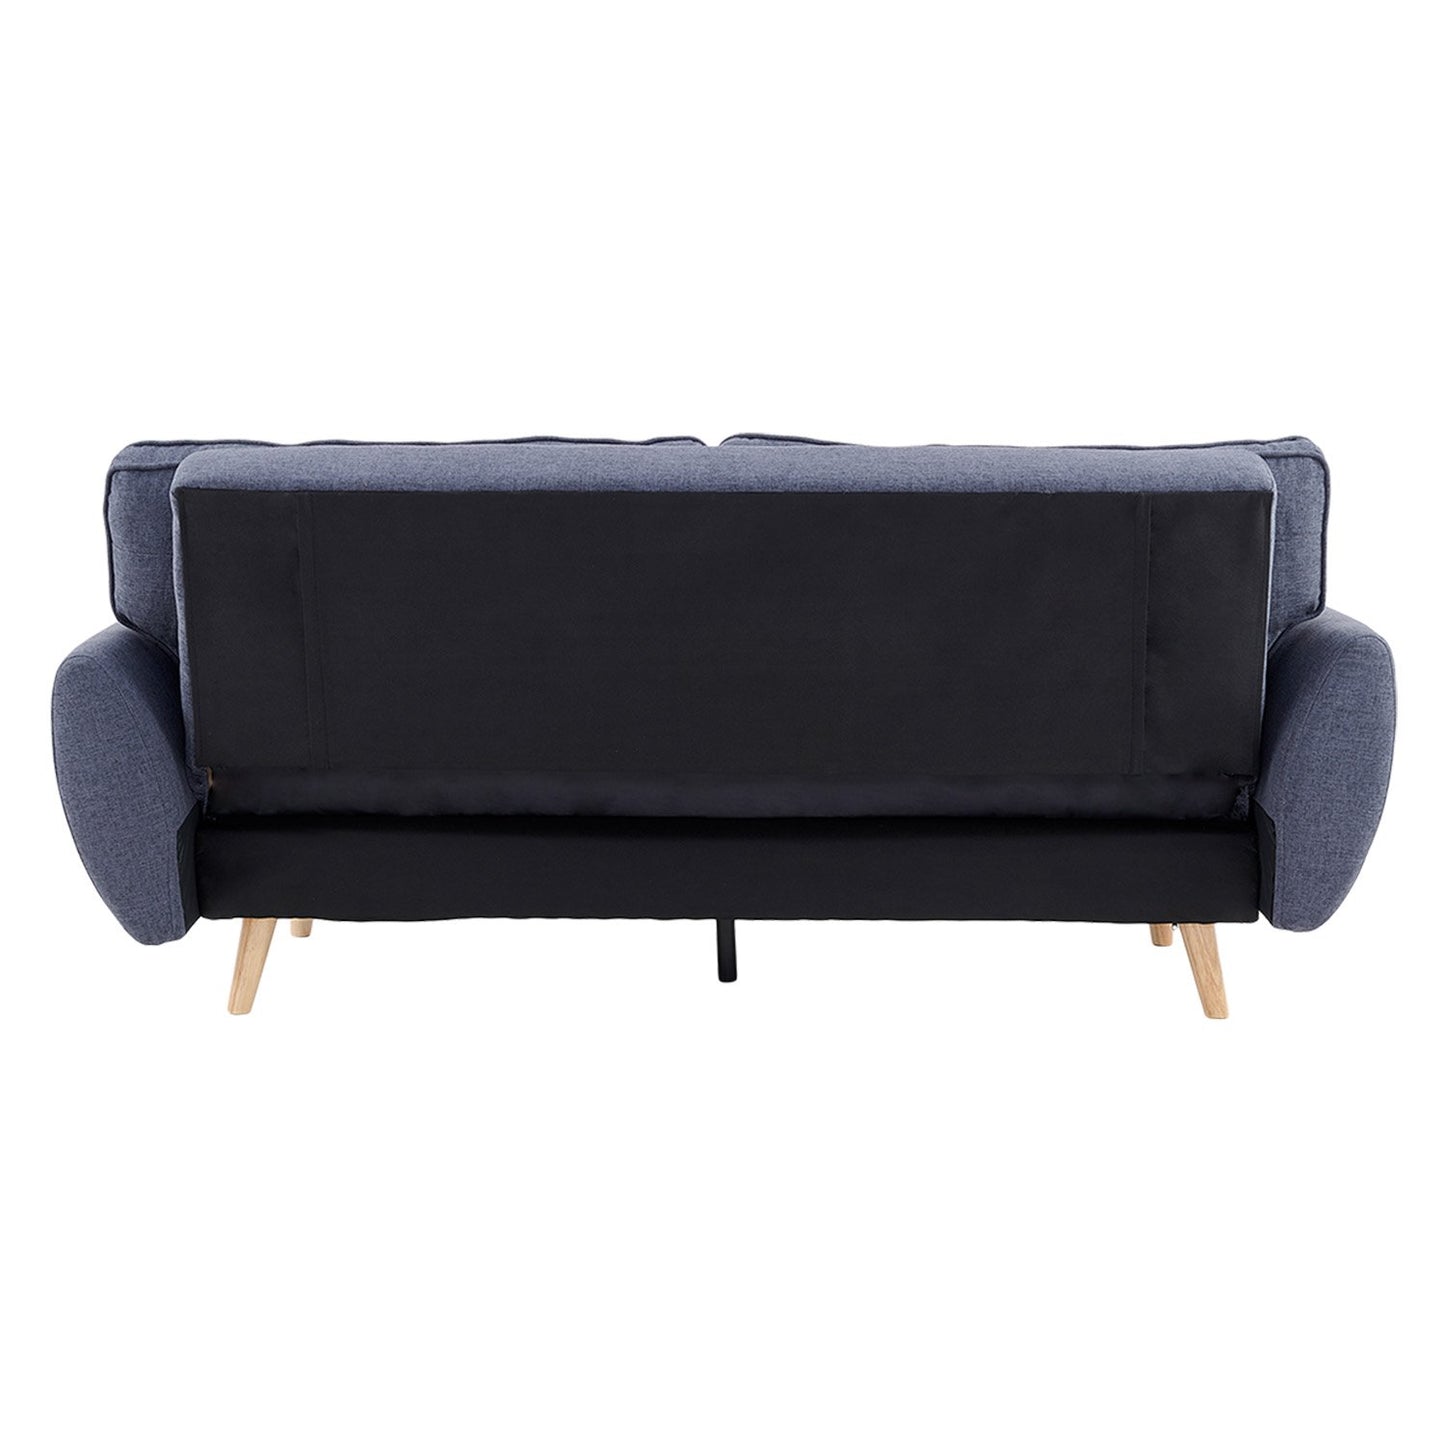 Mariah 3-Seater Linen Fabric Futon Modular Sofa Bed Suite - Dark Grey